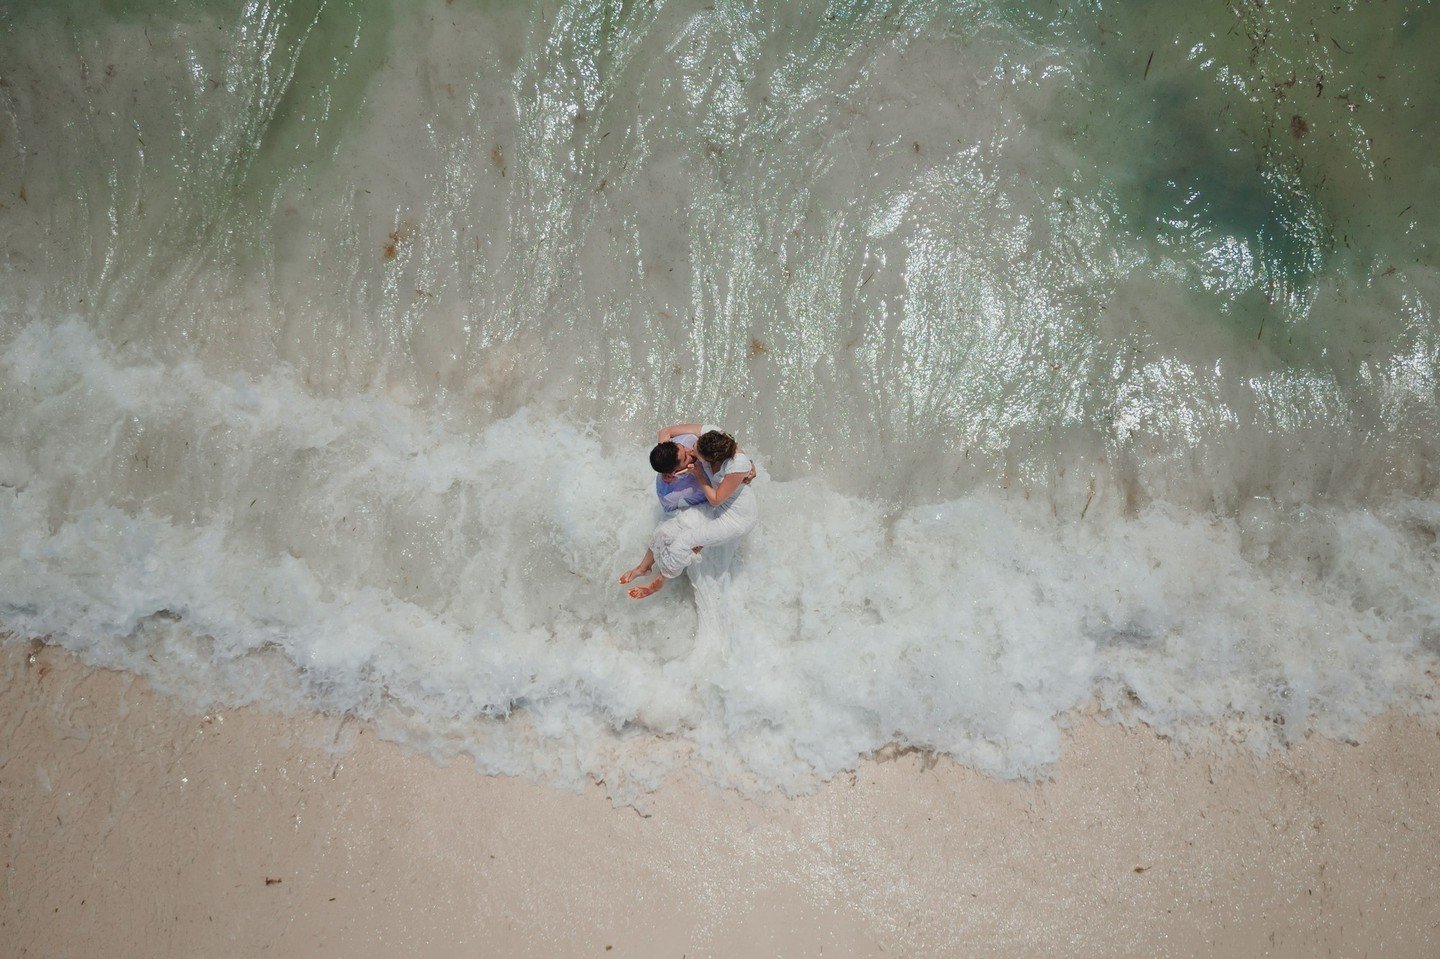 Nothing like a &quot;just married&quot; dive into the ocean #PartnersinParadise⁠
🇲🇽 @shaadidestinations⁠ ⁠
👨🏻&zwj;🎨 @idocelebrations⁠
📸 @jhankarlo_photography☝🏼⁠
🎪 @zunigadecocancun⁠
💐 @pistiloeventdecor⁠
🎧 @mvpdjs⁠
💄 @alexcorbanezi⁠
🖋 @l